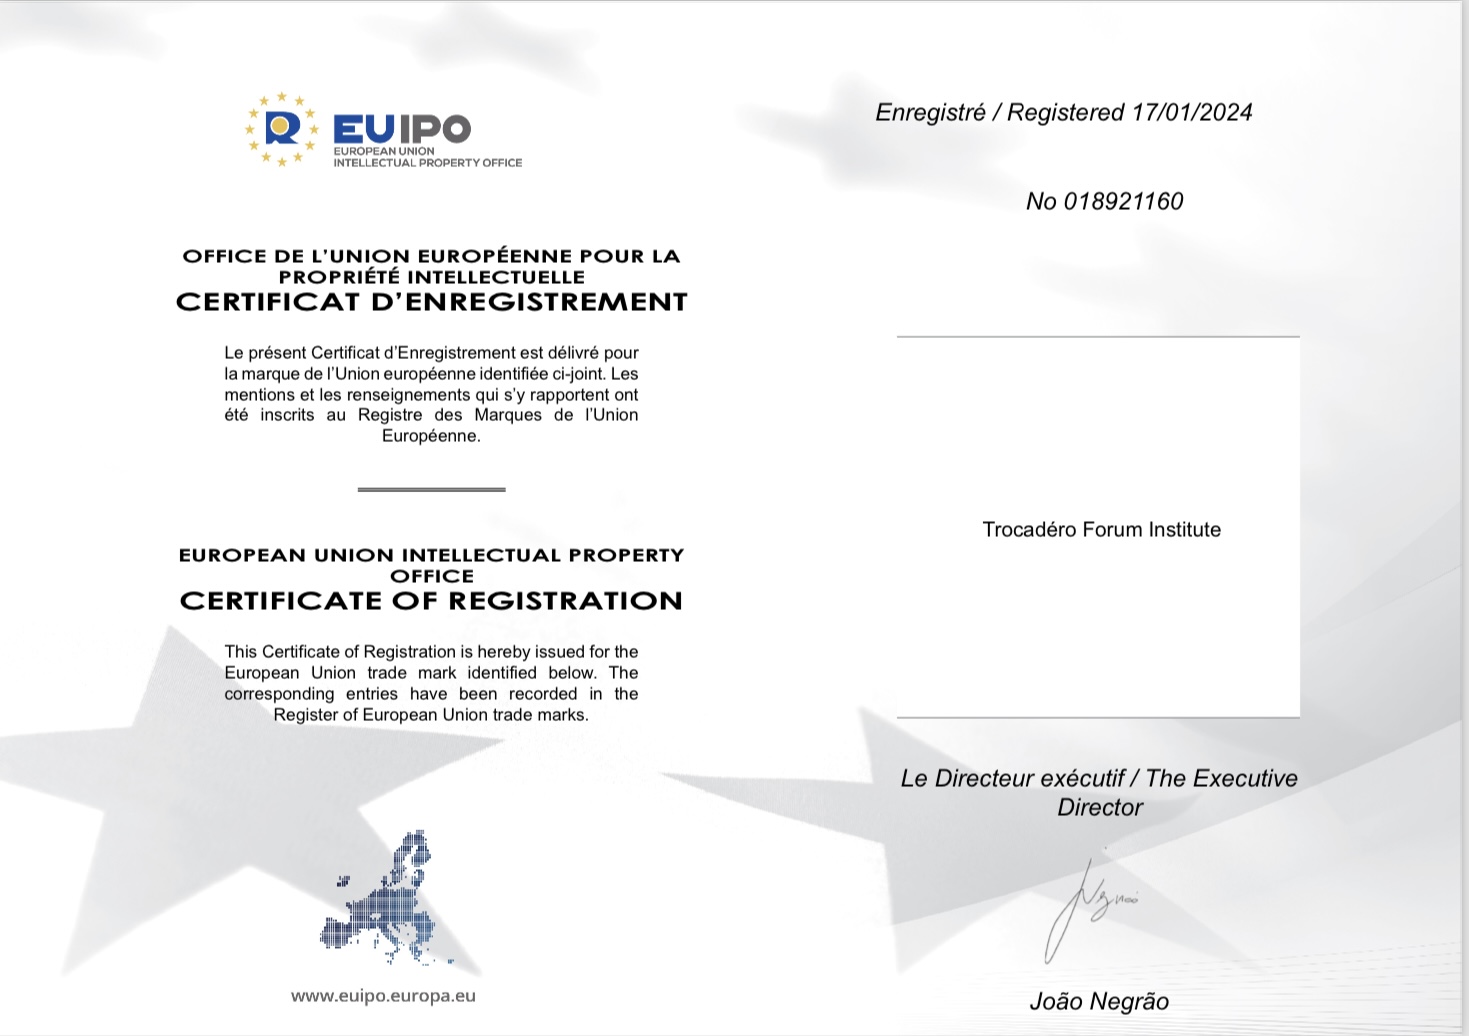 EUIPO registered !